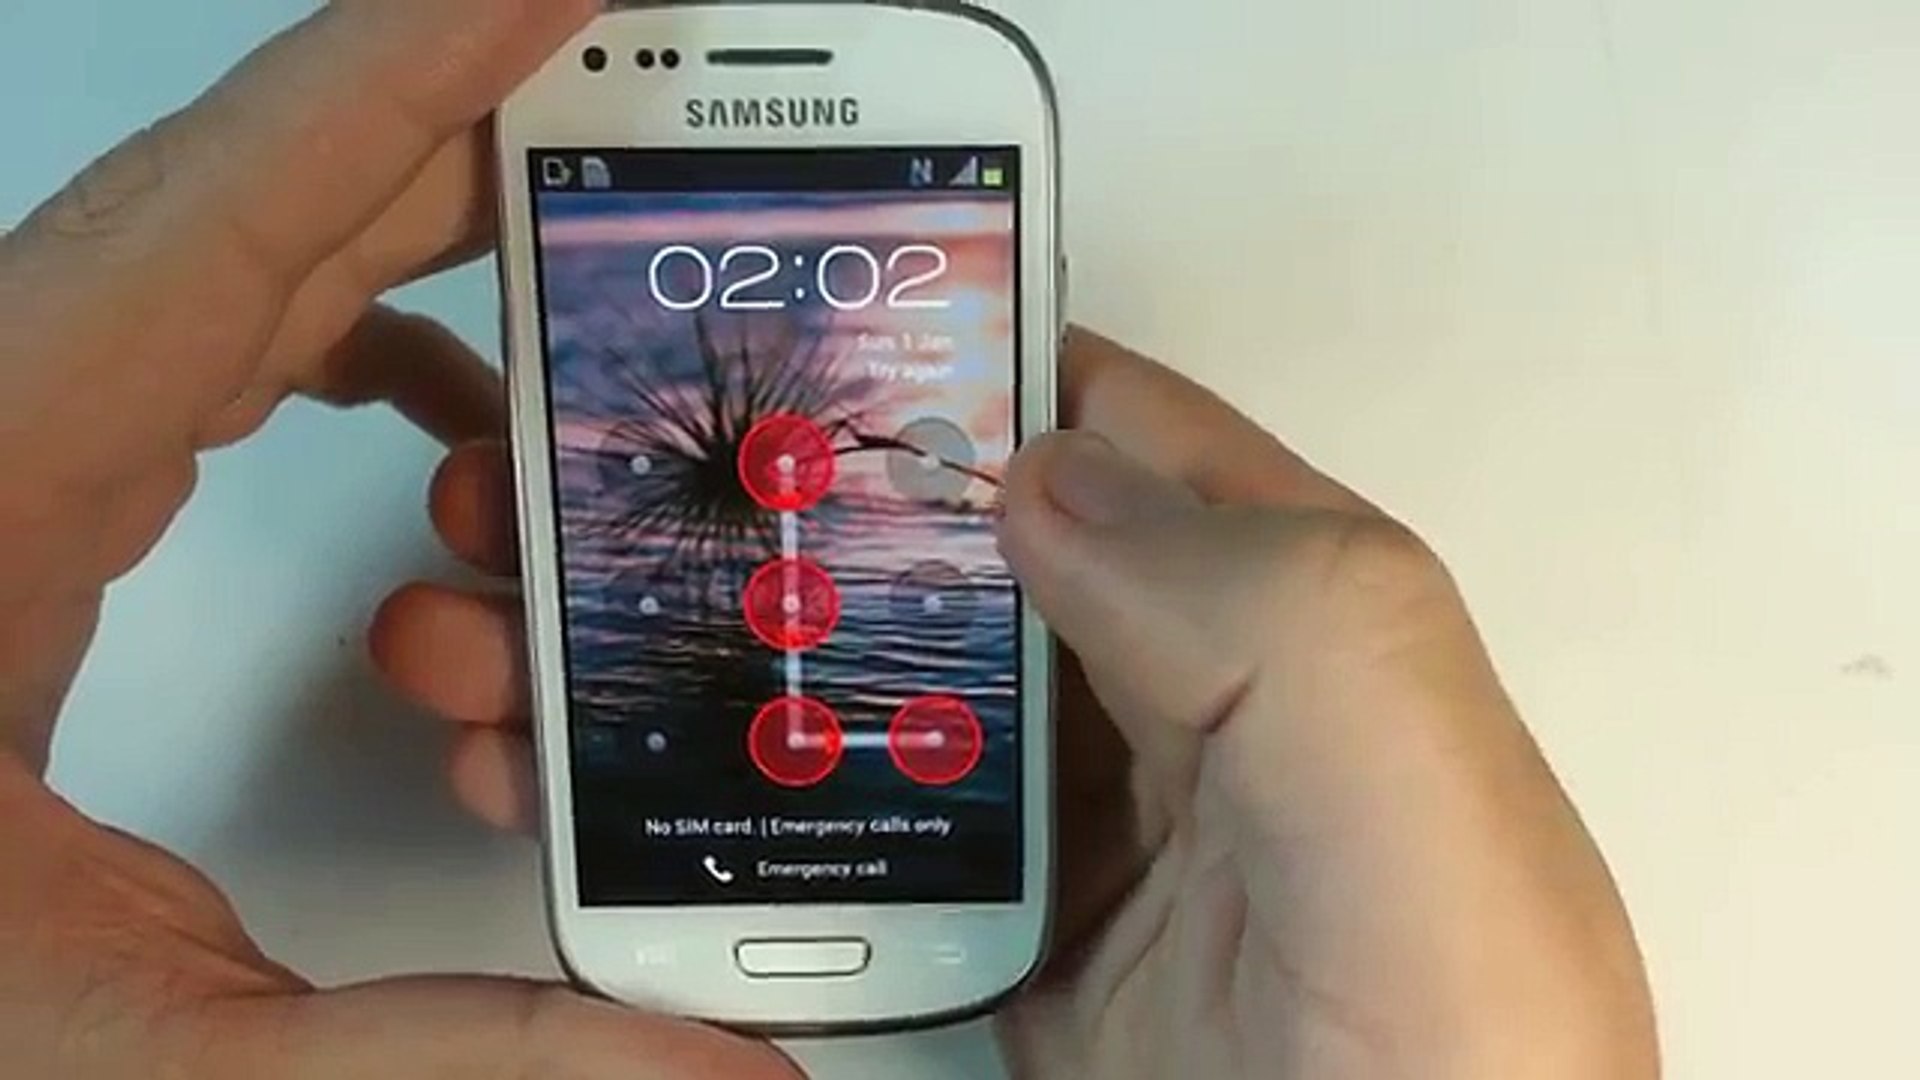 Samsung Galaxy S3 mini I8190 hard reset - video Dailymotion